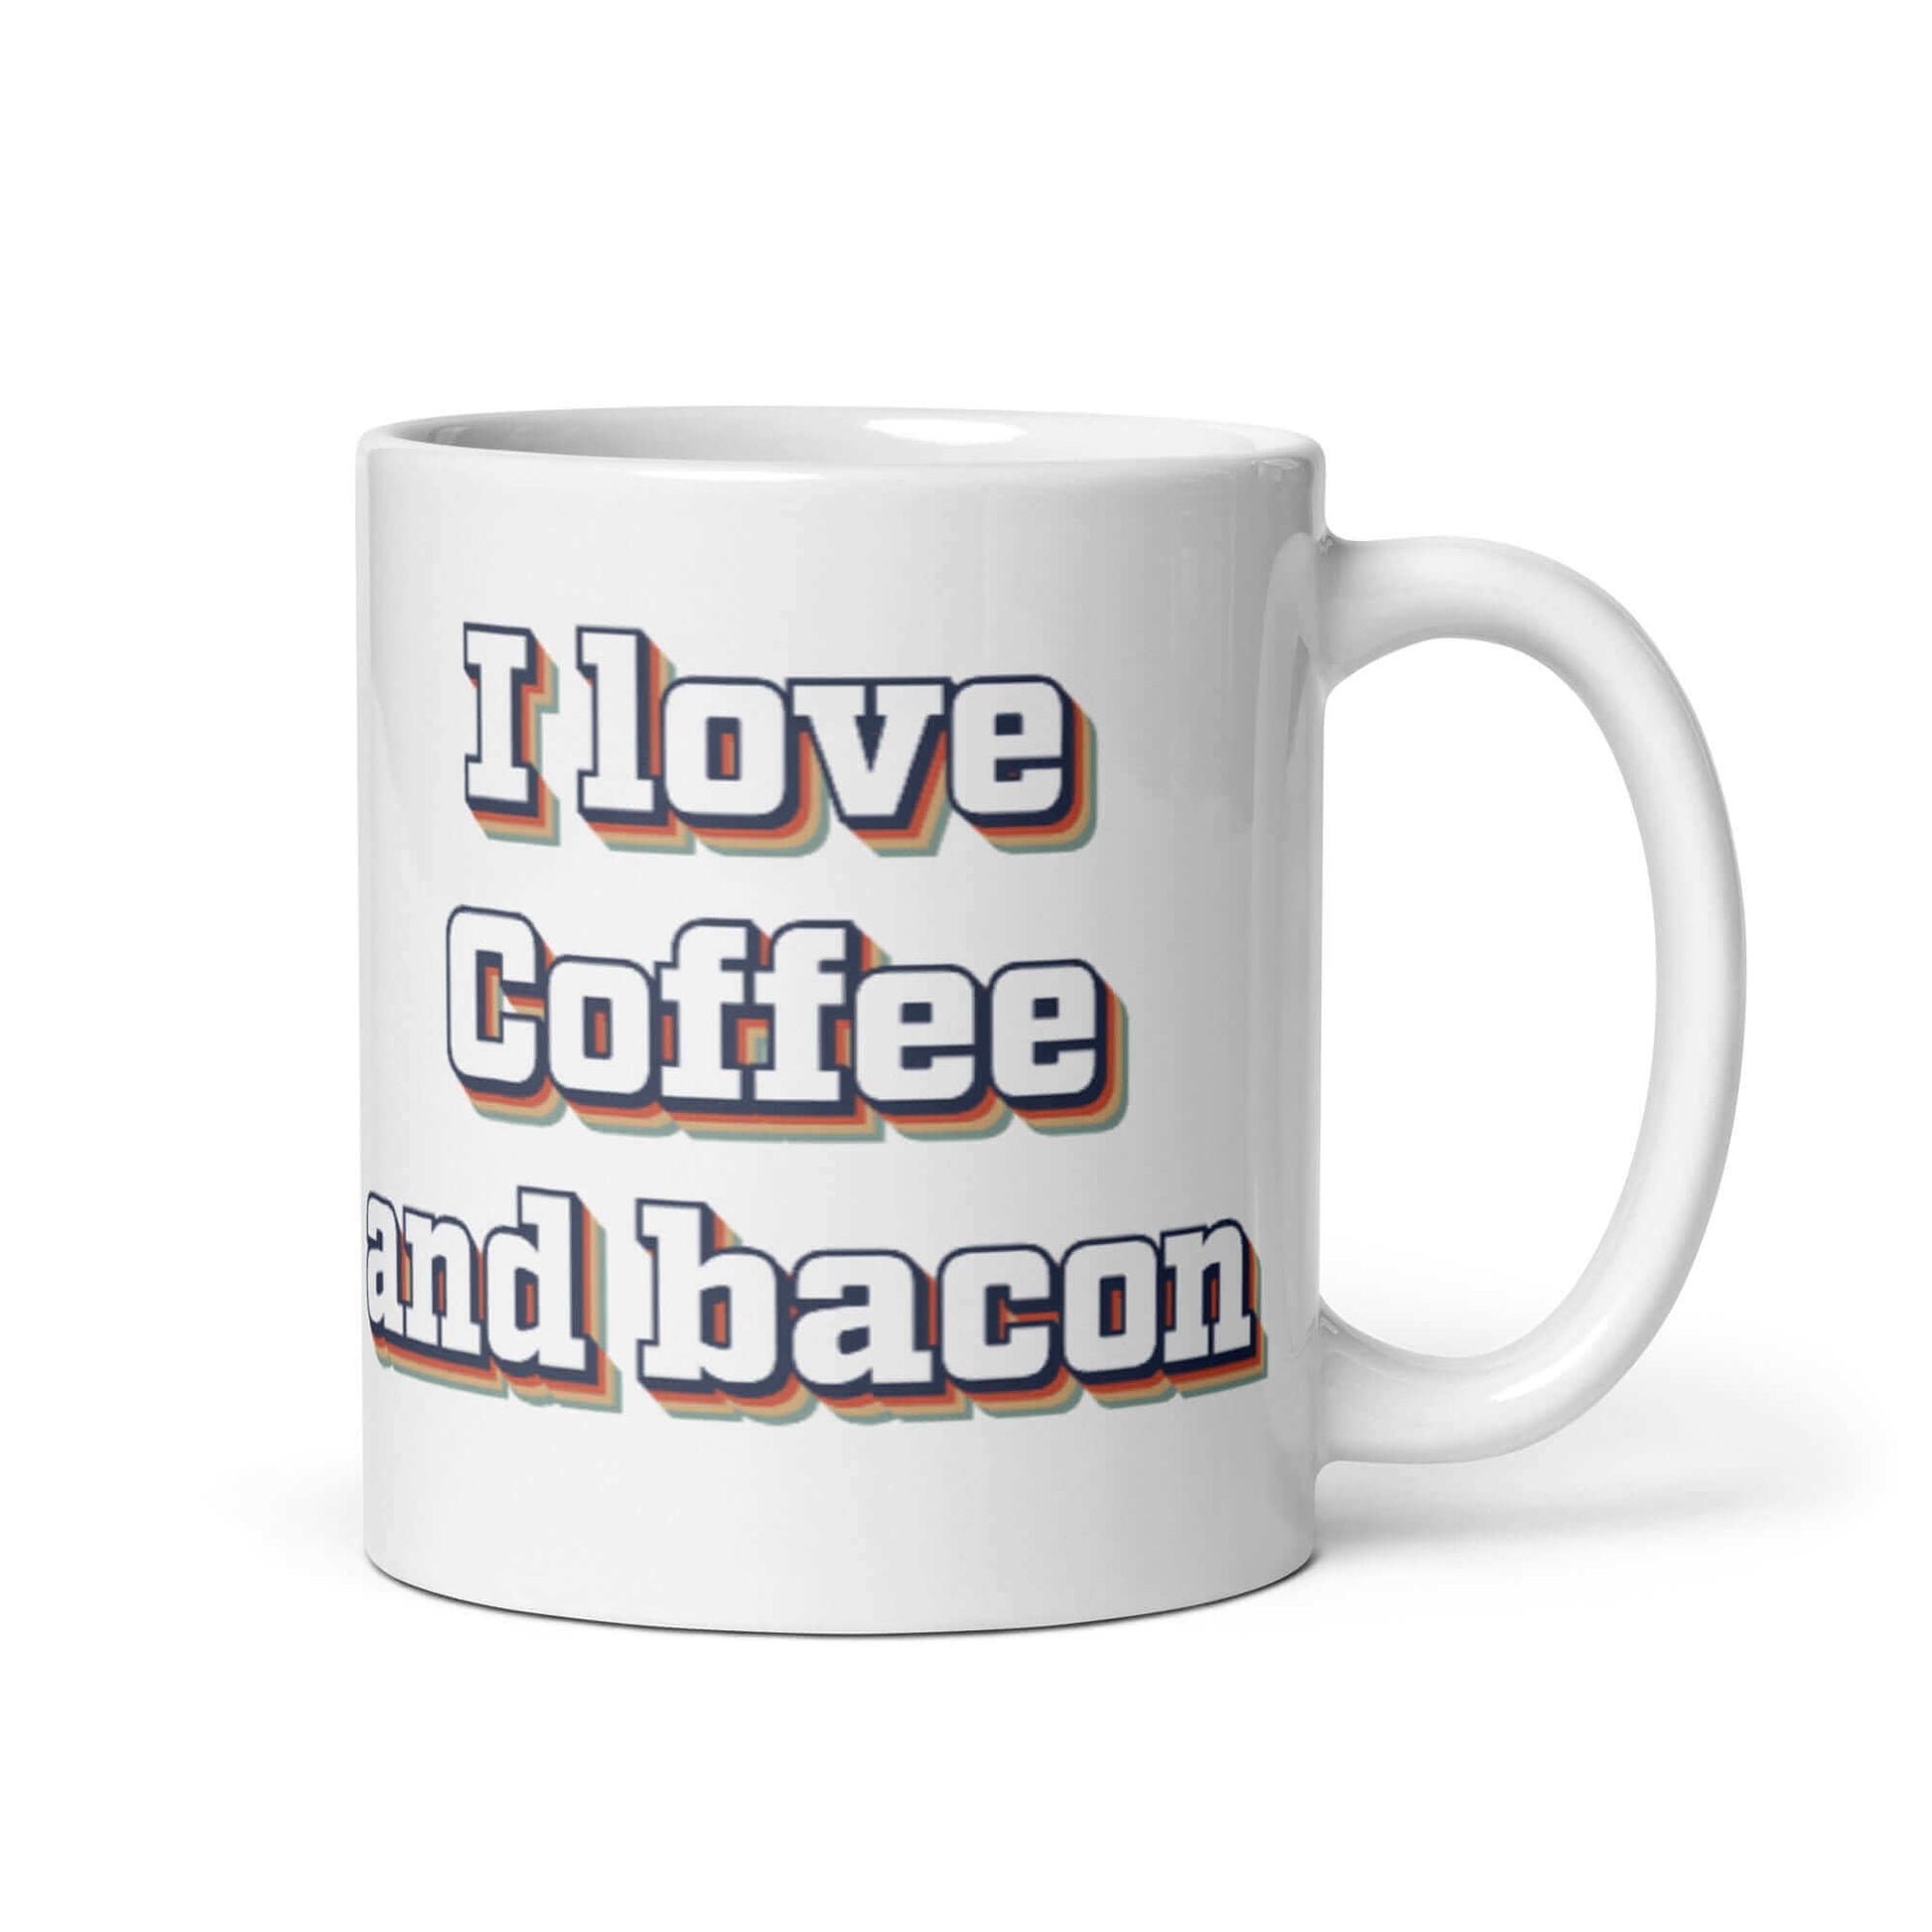 I love coffee and bacon - White glossy mug - Horrible Designs